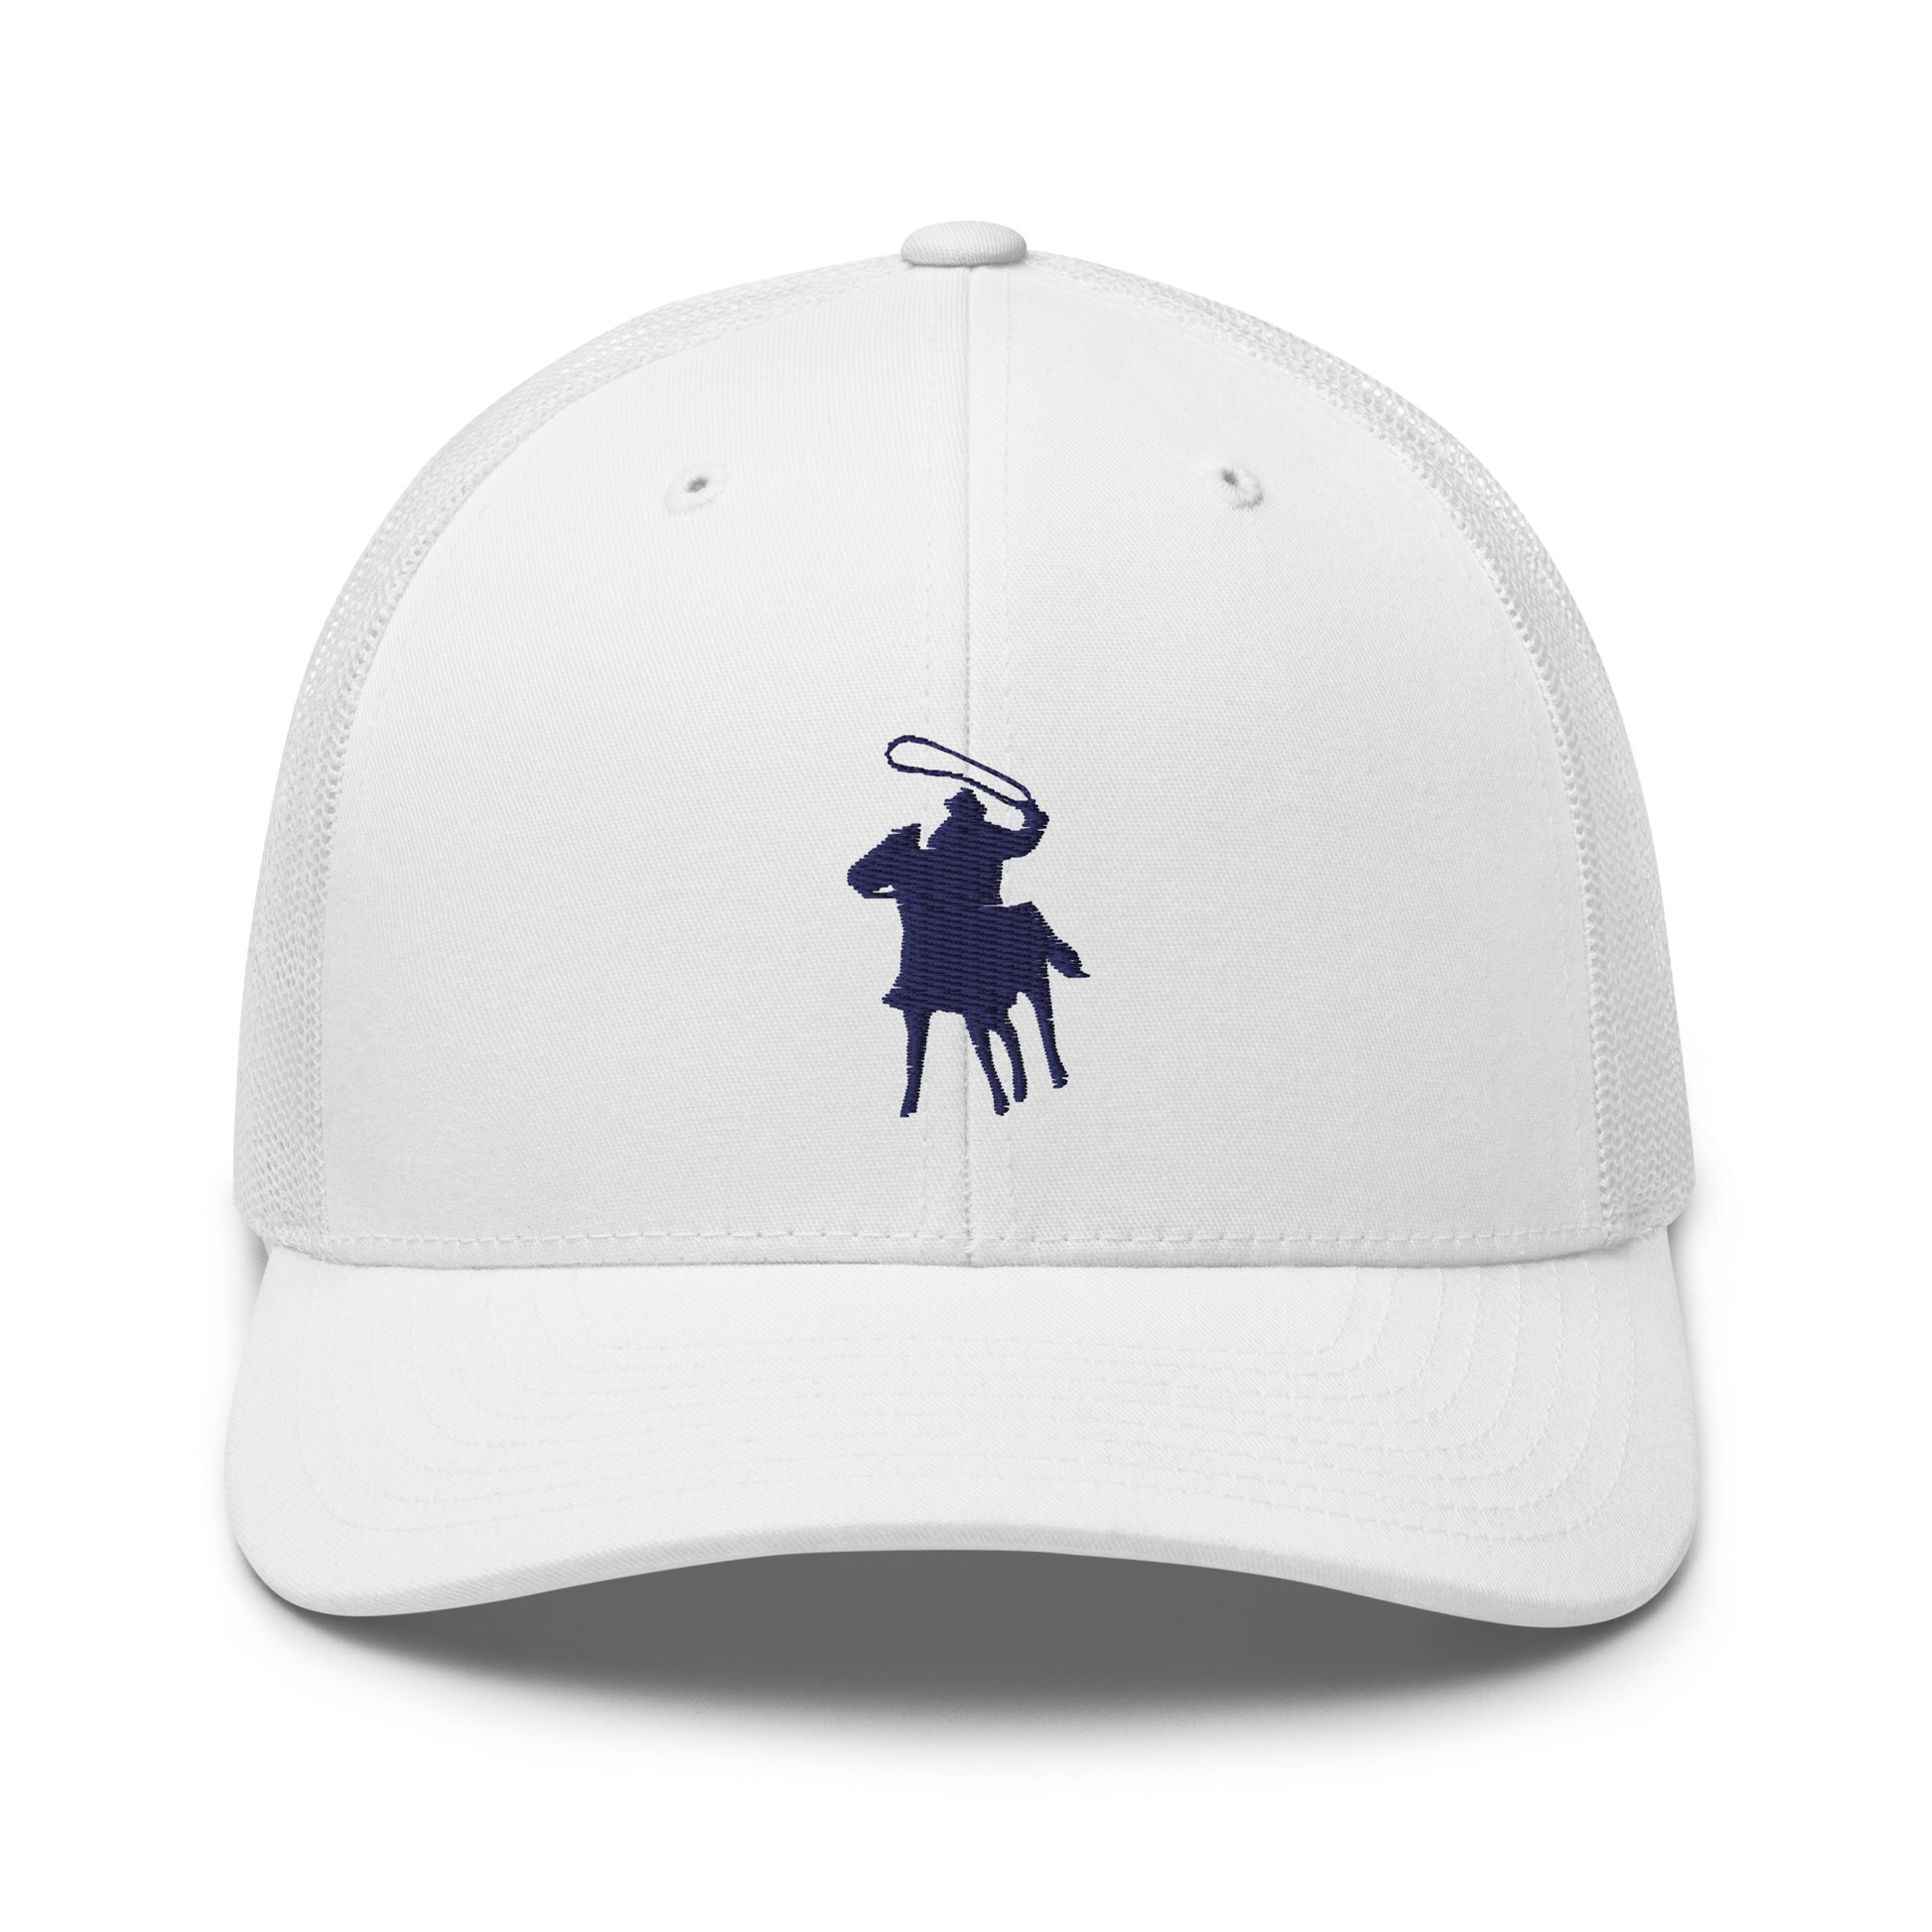 Country Polo Trucker Cap (Black Logo on White Hat)